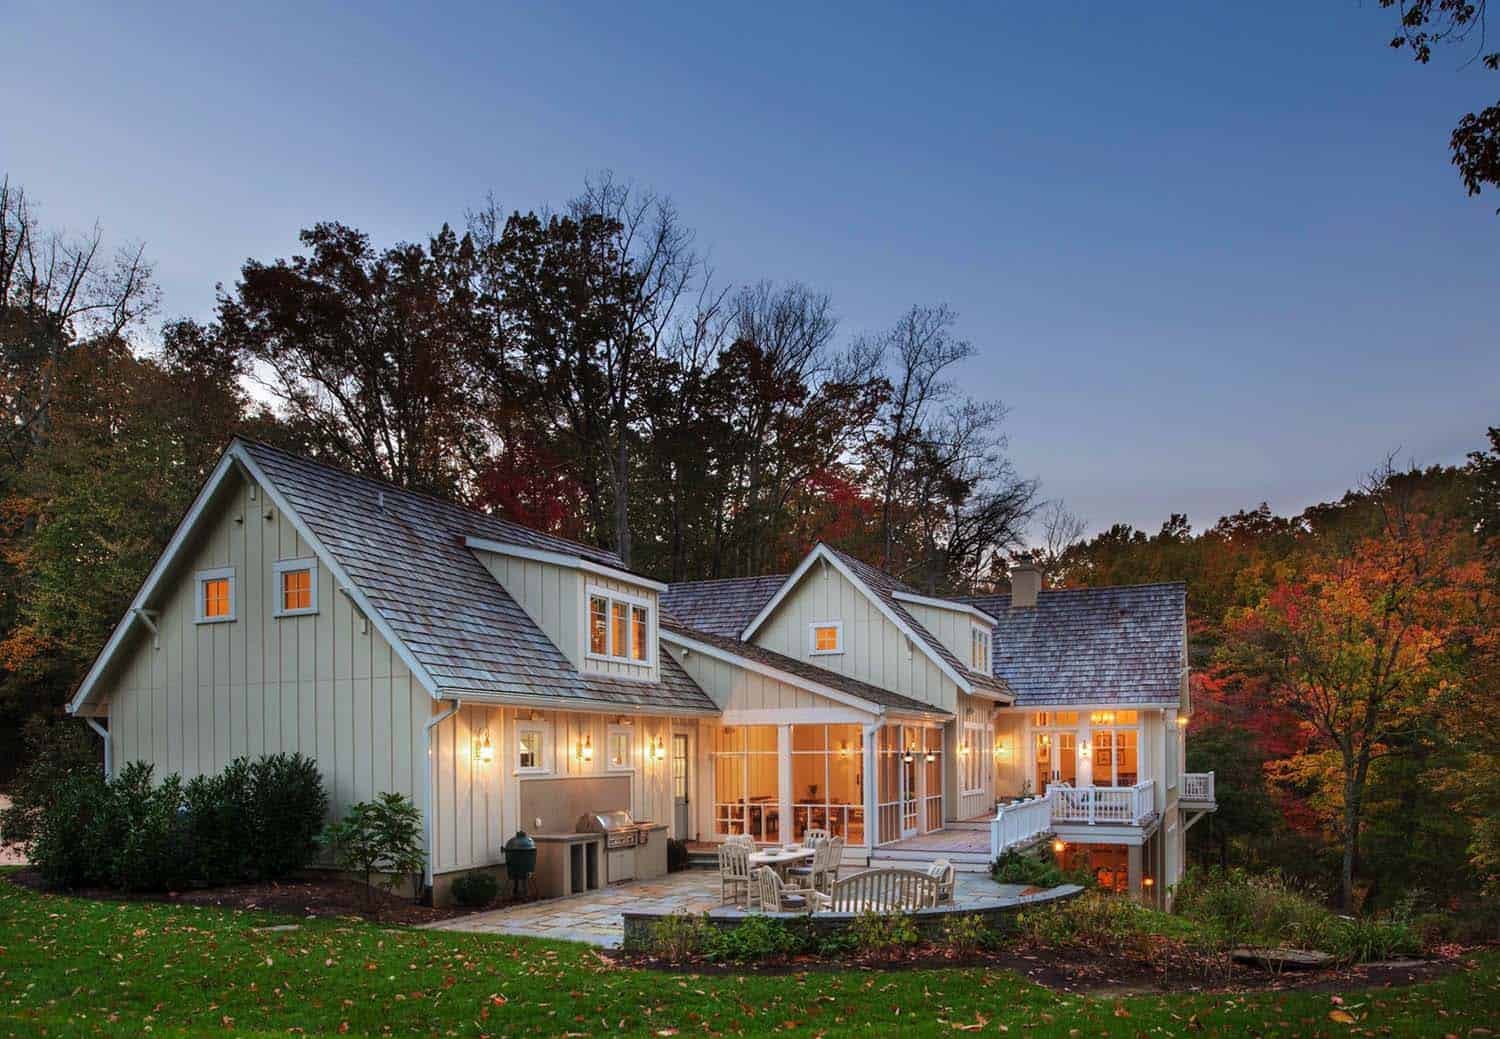 Lakeside family cottage set on a hillside overlooking Chesapeake Bay